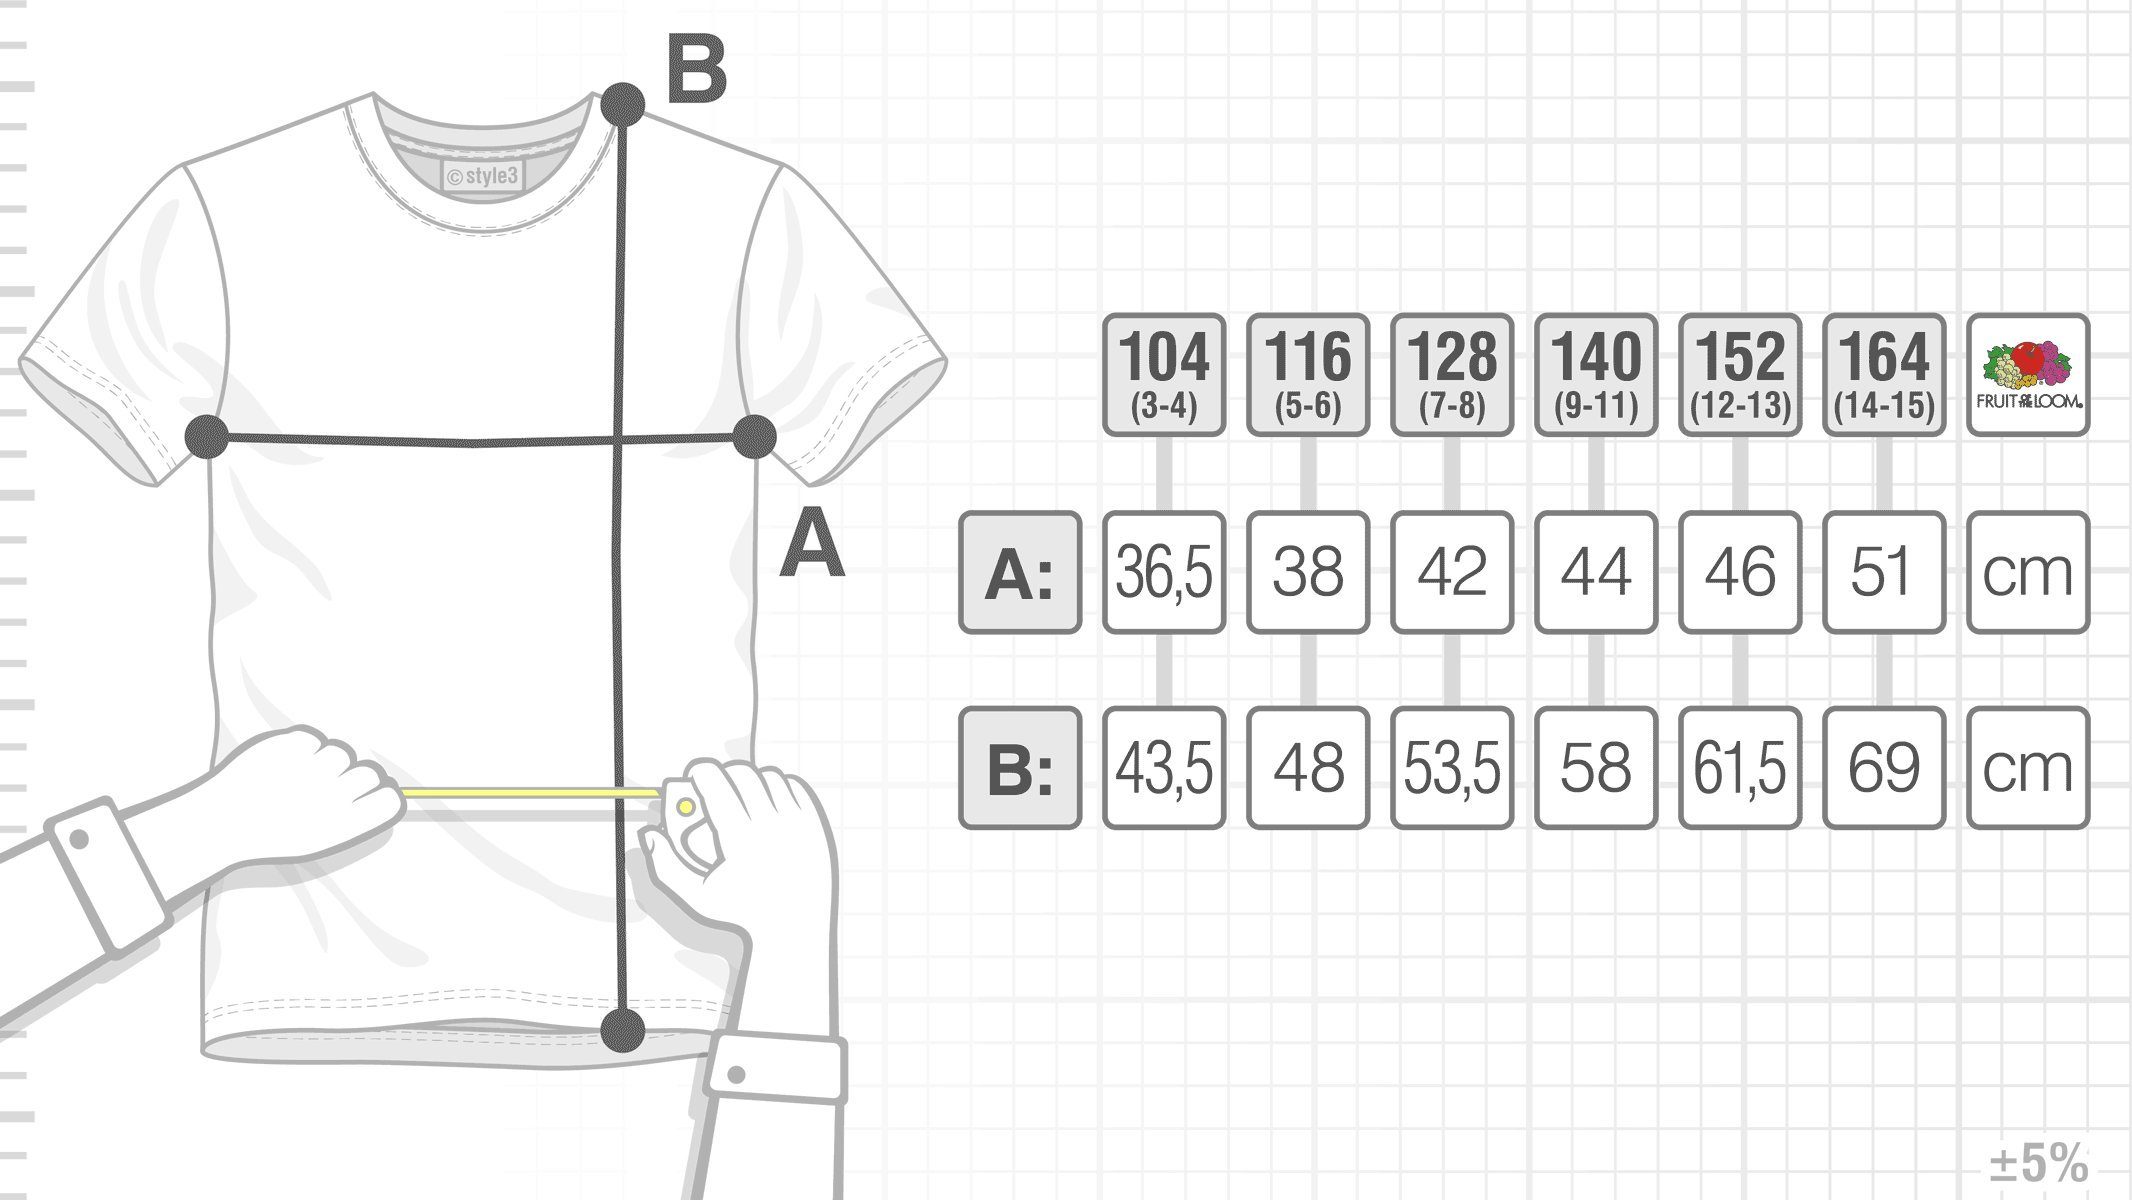 T-Shirt Boy Virtual controller 32-Bit schwarz Blaupause Print-Shirt style3 videospiel Kinder